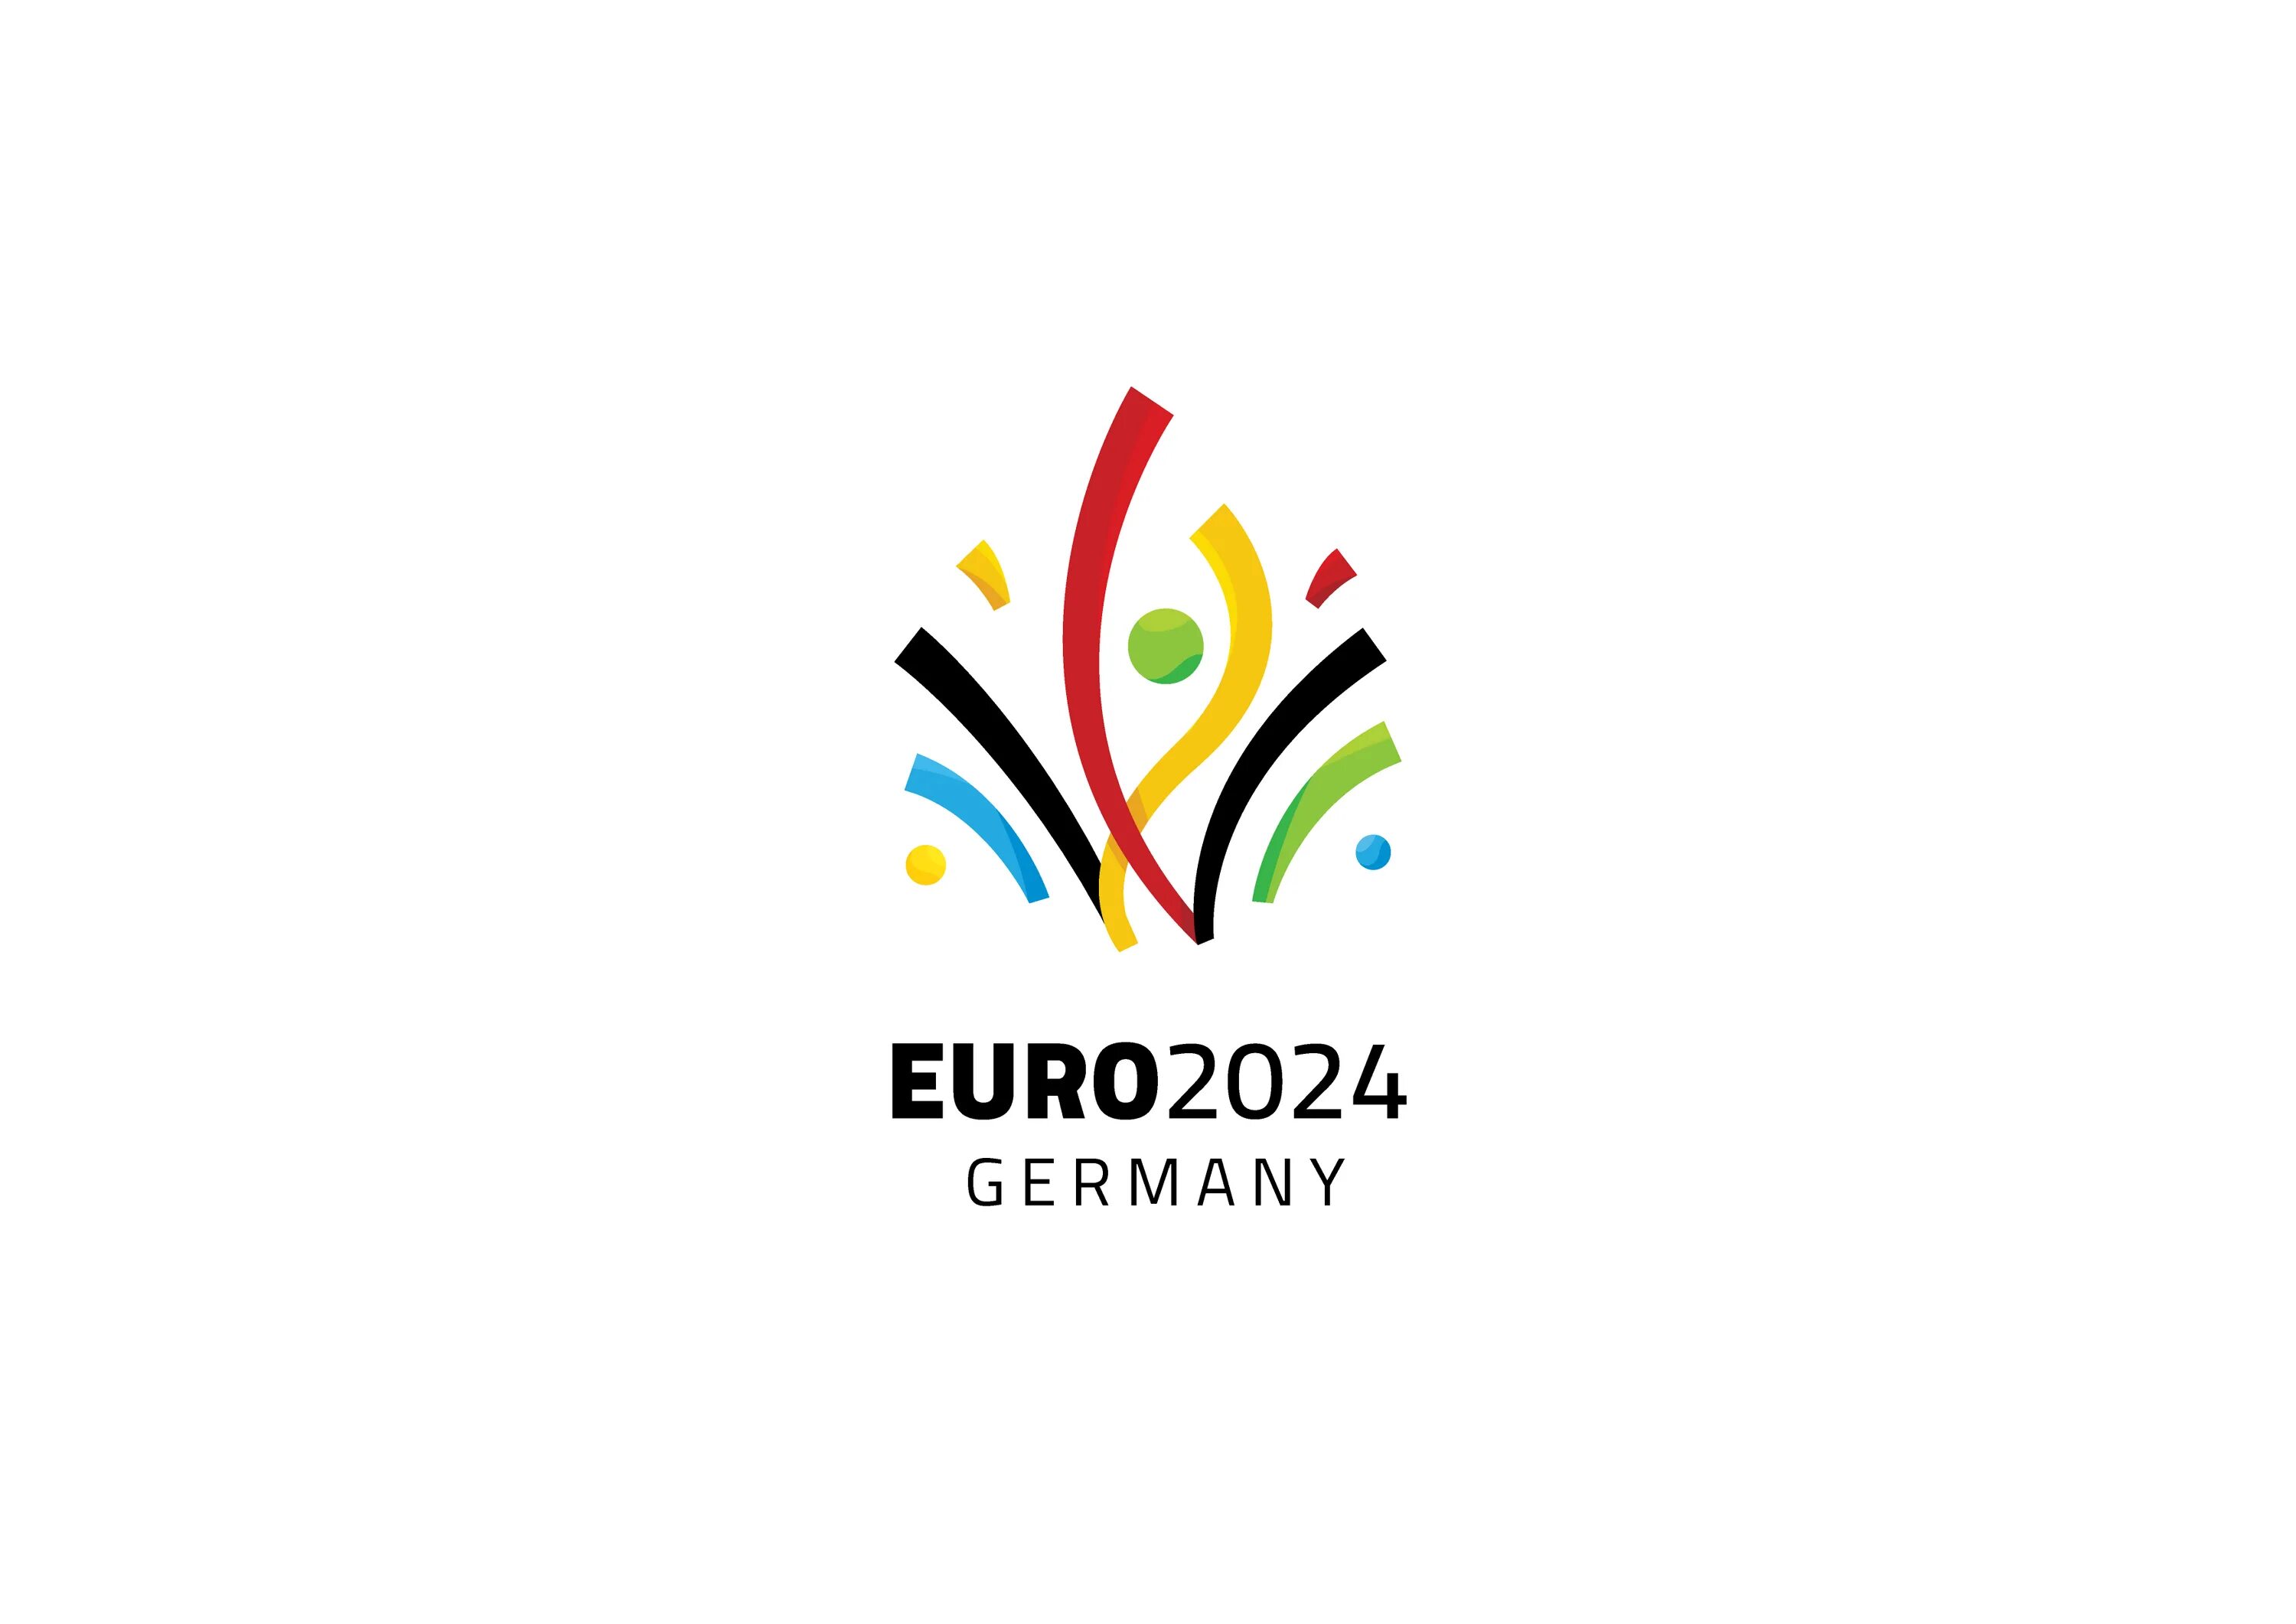 UEFA Euro 2024. Euro 2024 Germany. Euro 2024 logo. Евро 2024 ло́готип. Логотип 2024 на прозрачном фоне